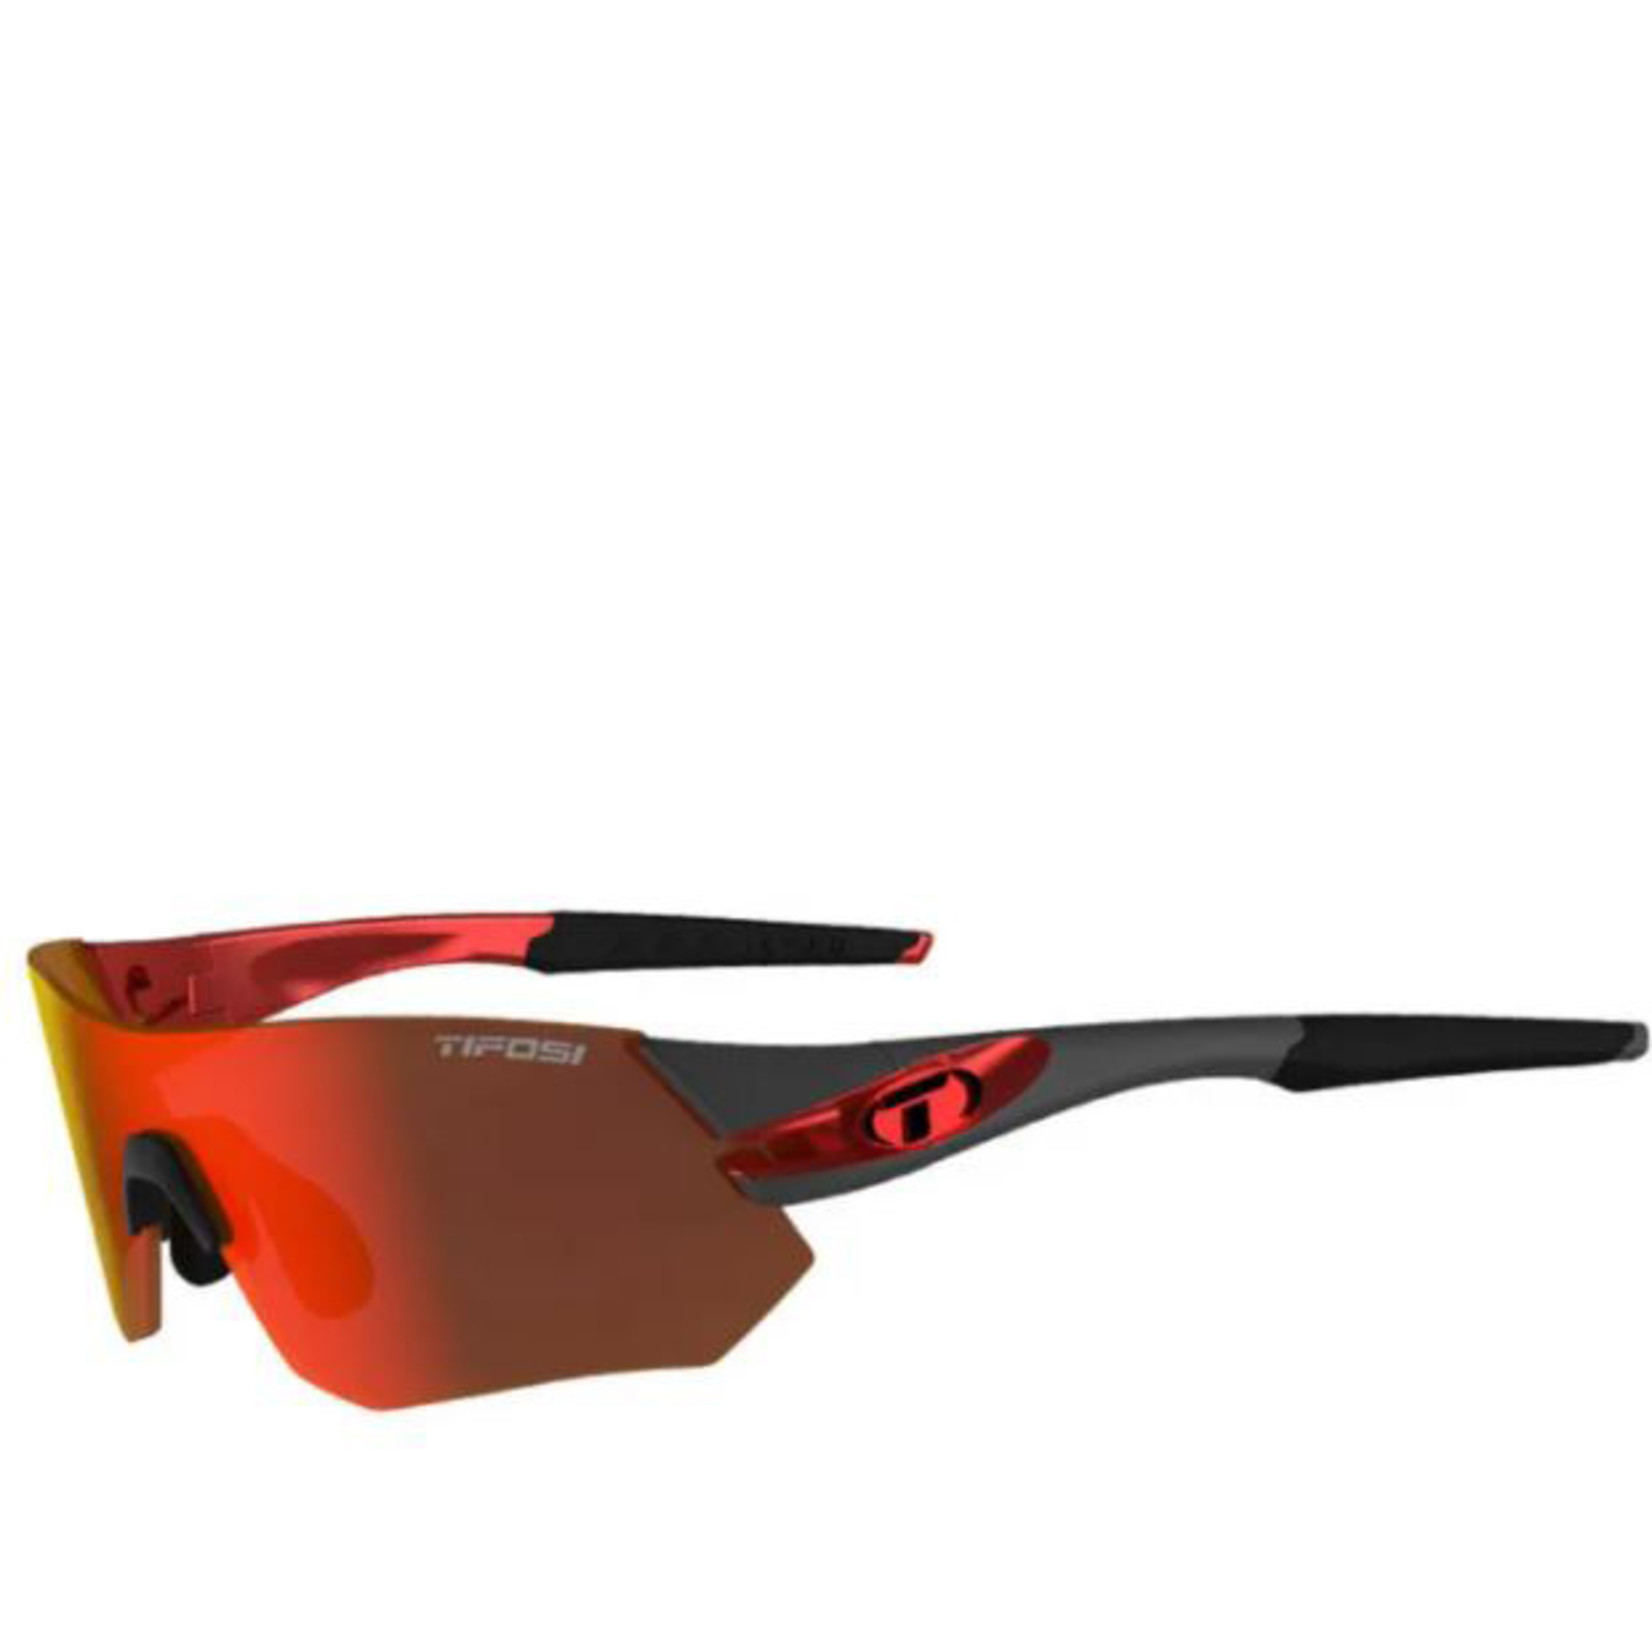 Tifosi Tifosi Cycling Sport Sunglasses - Tsali - Gunmetal/Red ICC 100% UV Protection